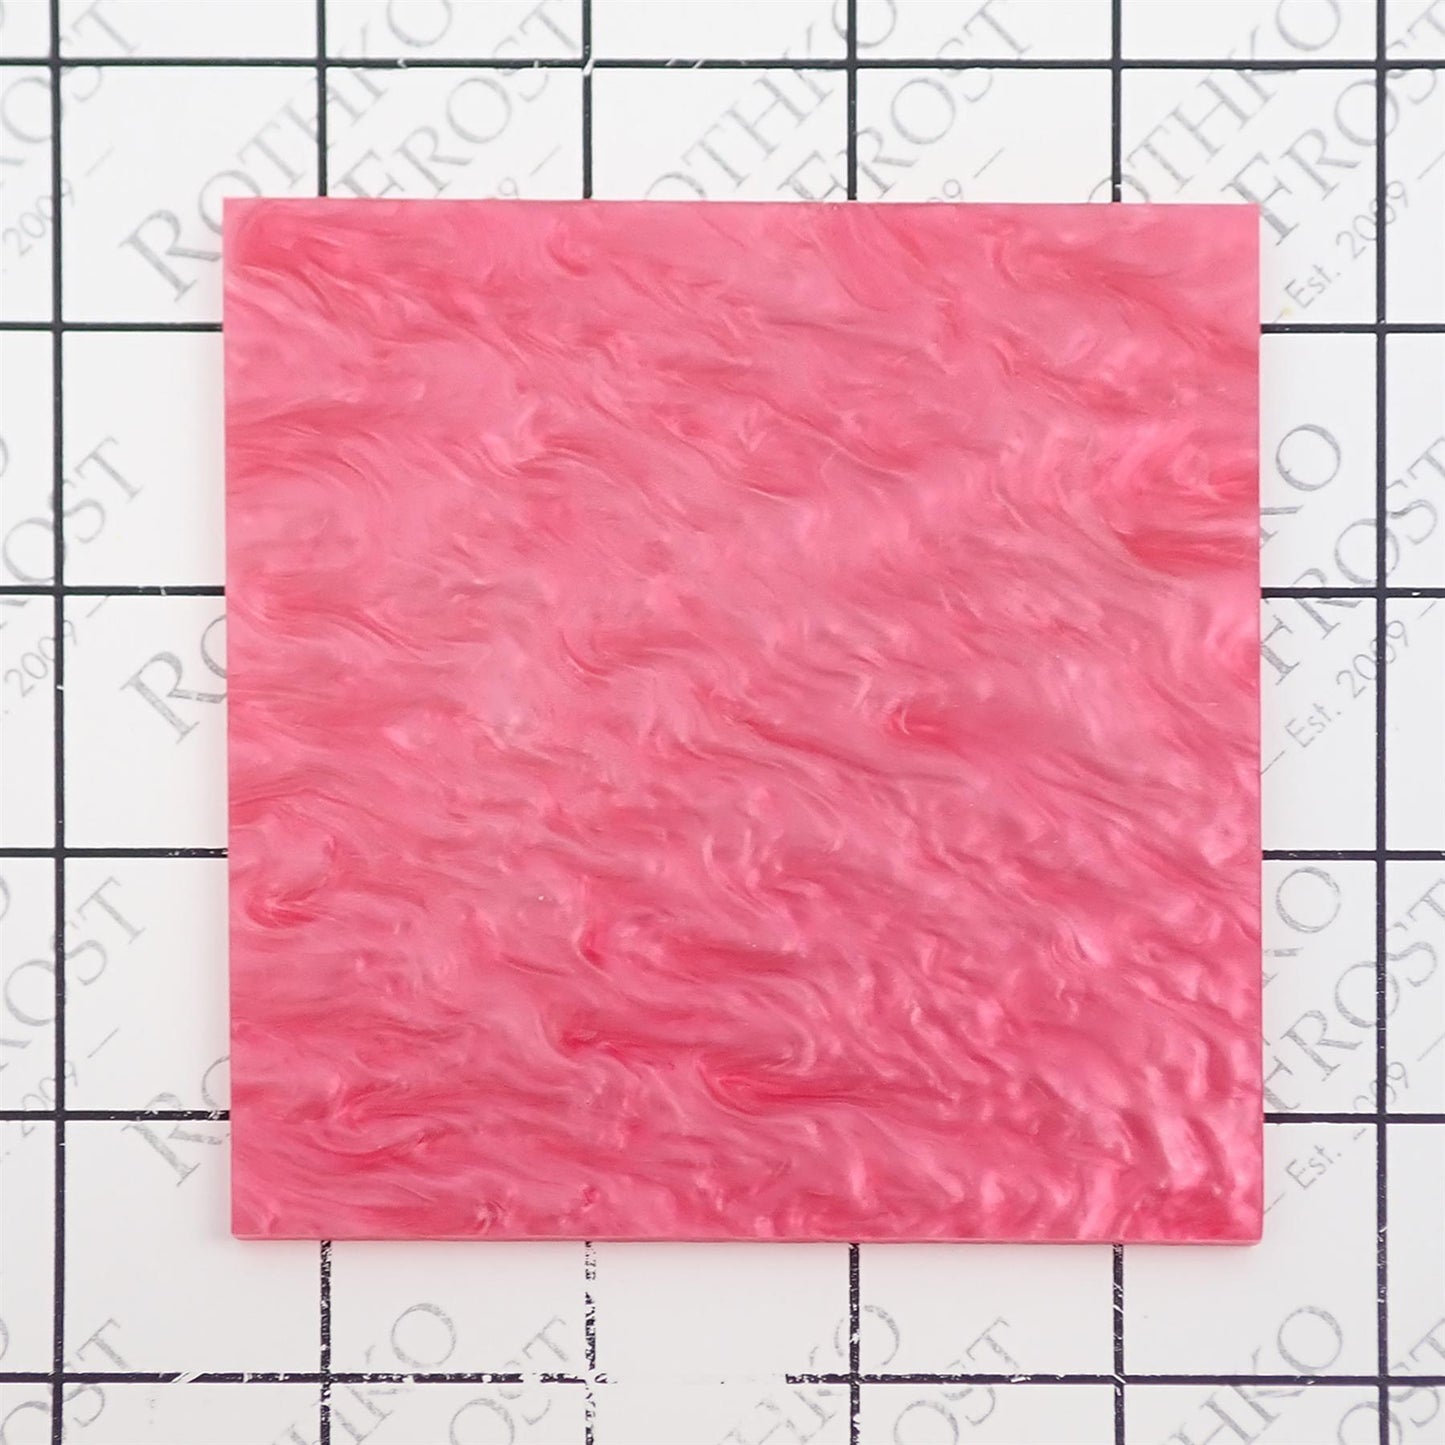 Incudo Pink Pearl Acrylic Sheet - 150x125x3mm